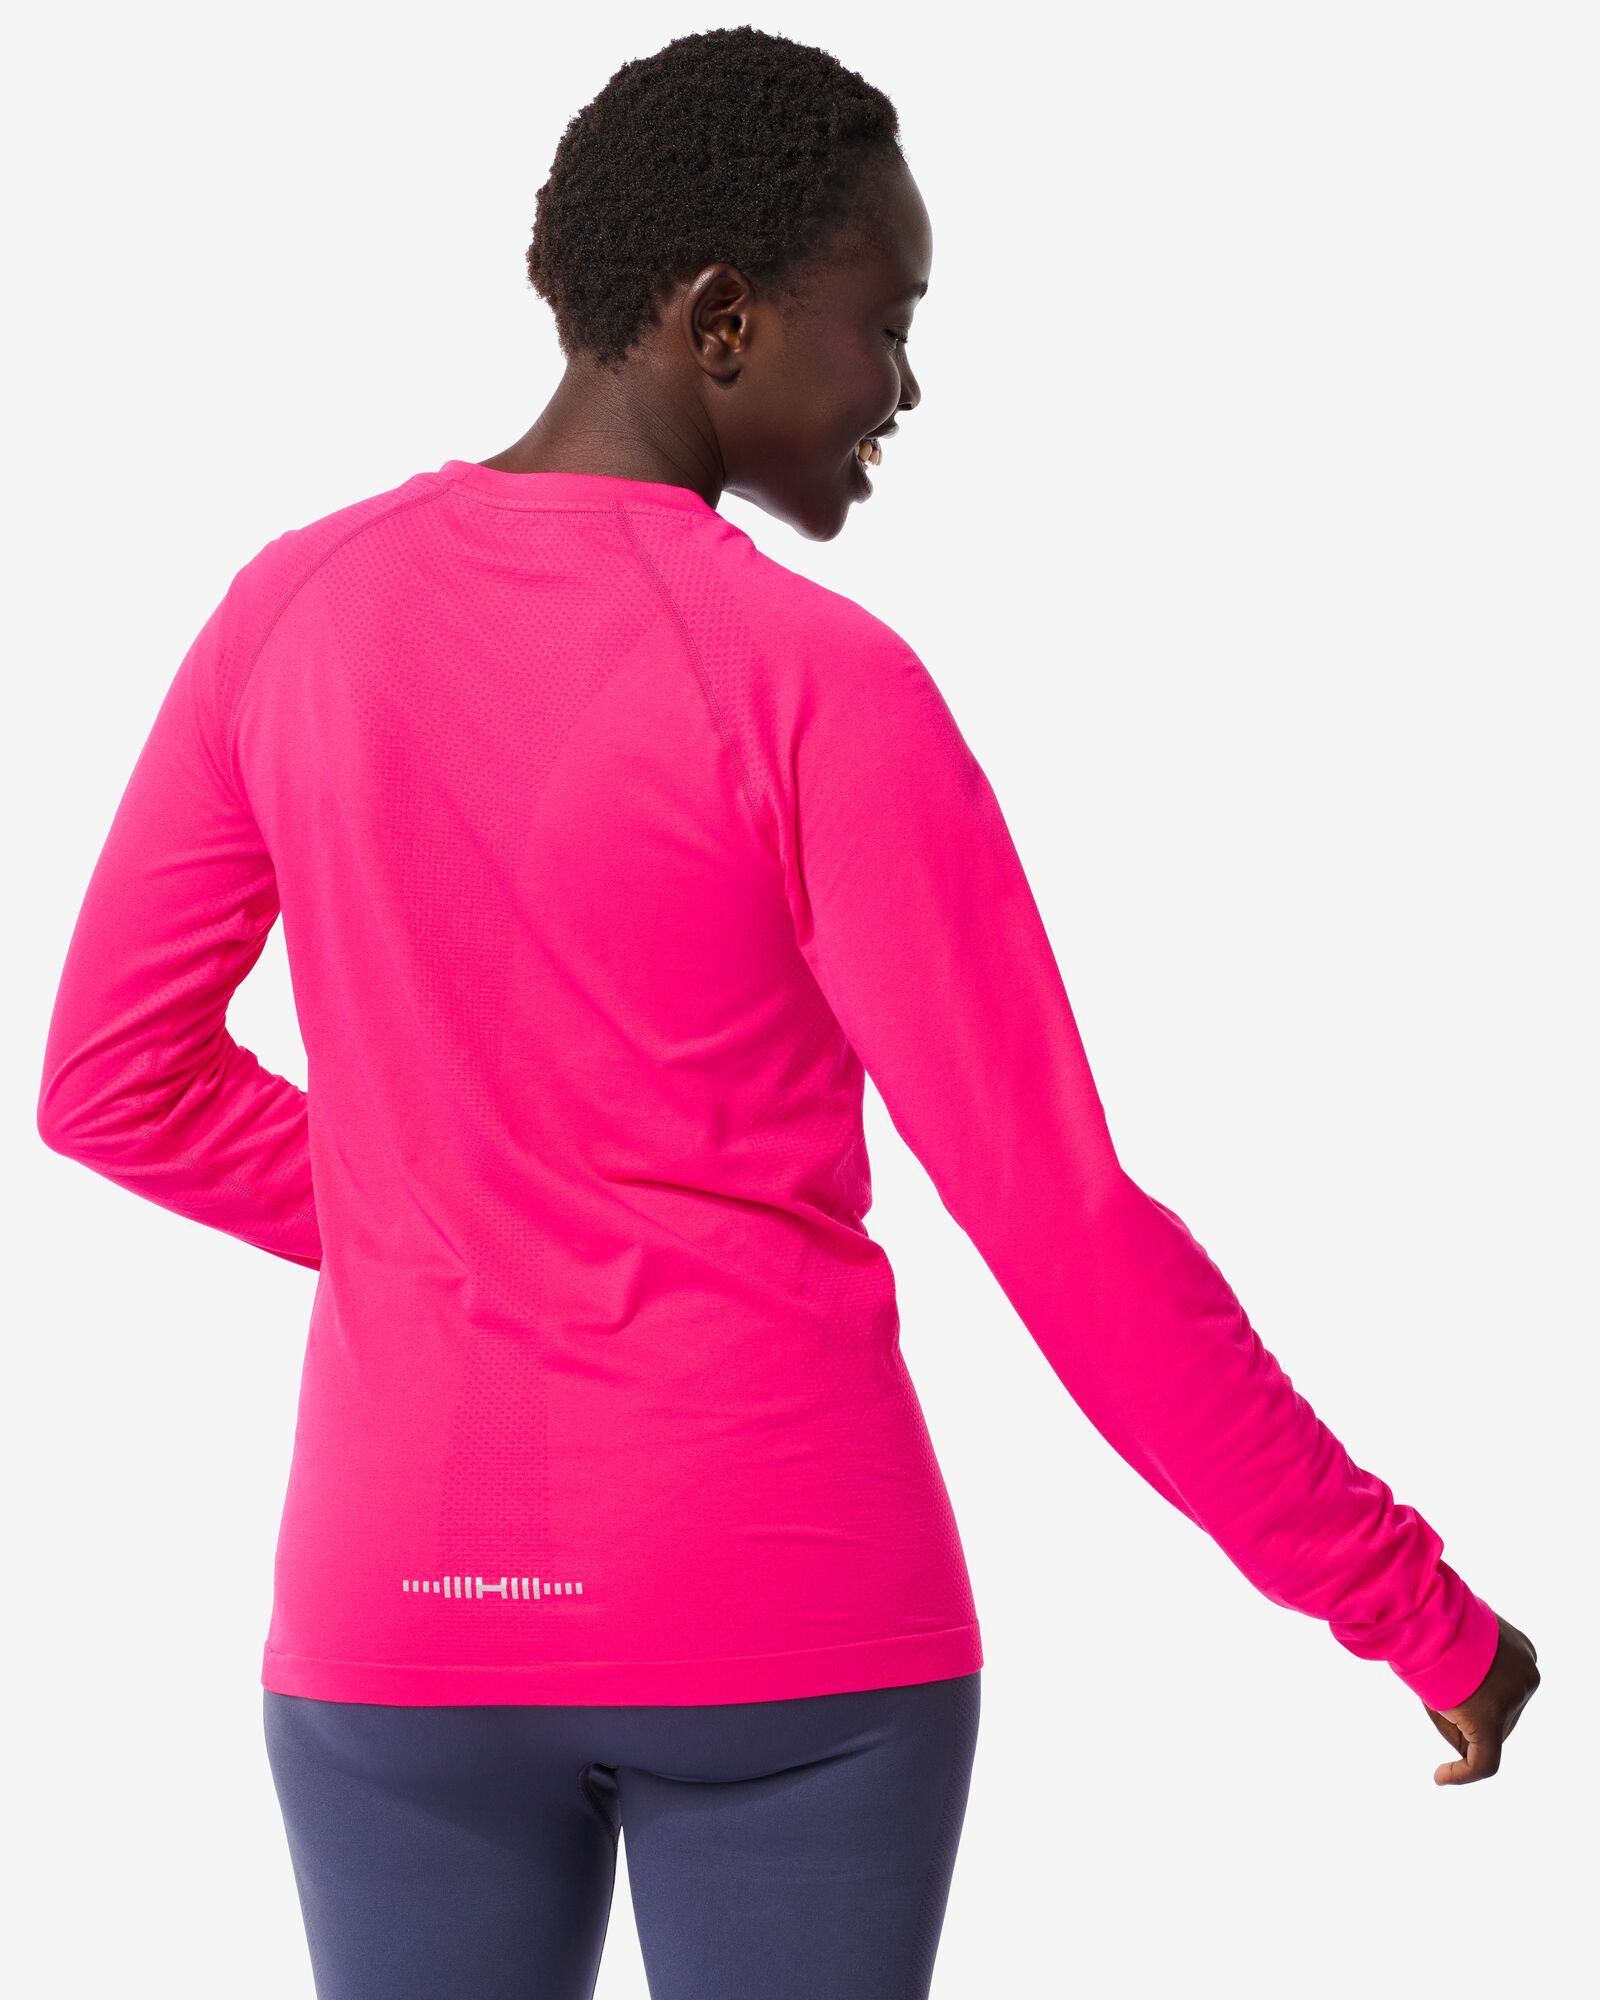 naadloos dames sportshirt roze roze - 36090134PINK - HEMA